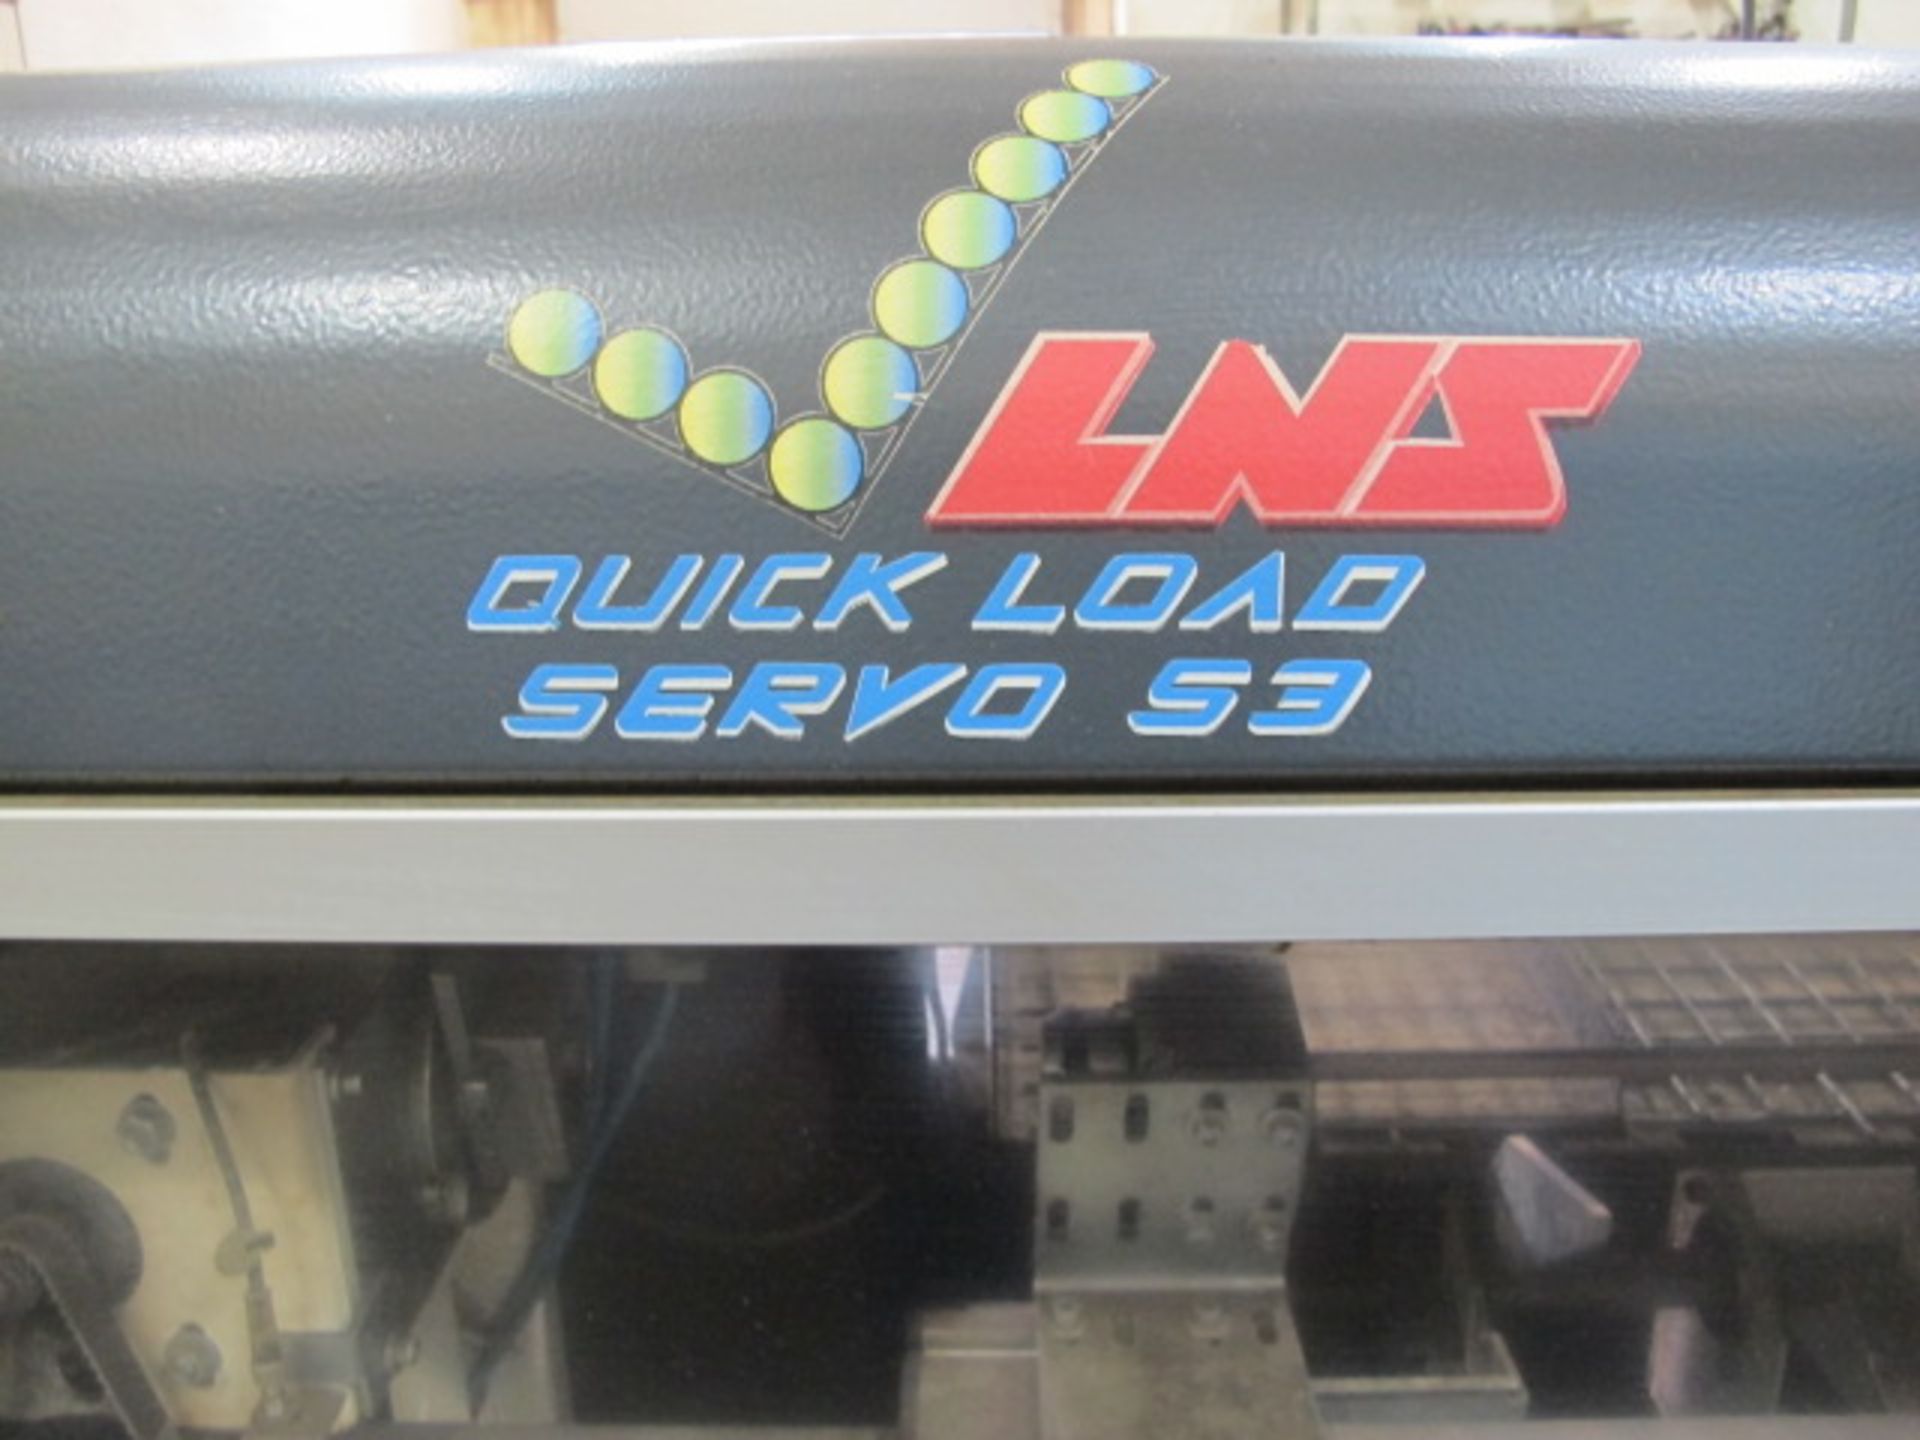 LNS Quick Load Servo S3 Automatic Bar Loader / Feeder s/n 303143 w/ LNS Controls - Image 4 of 5